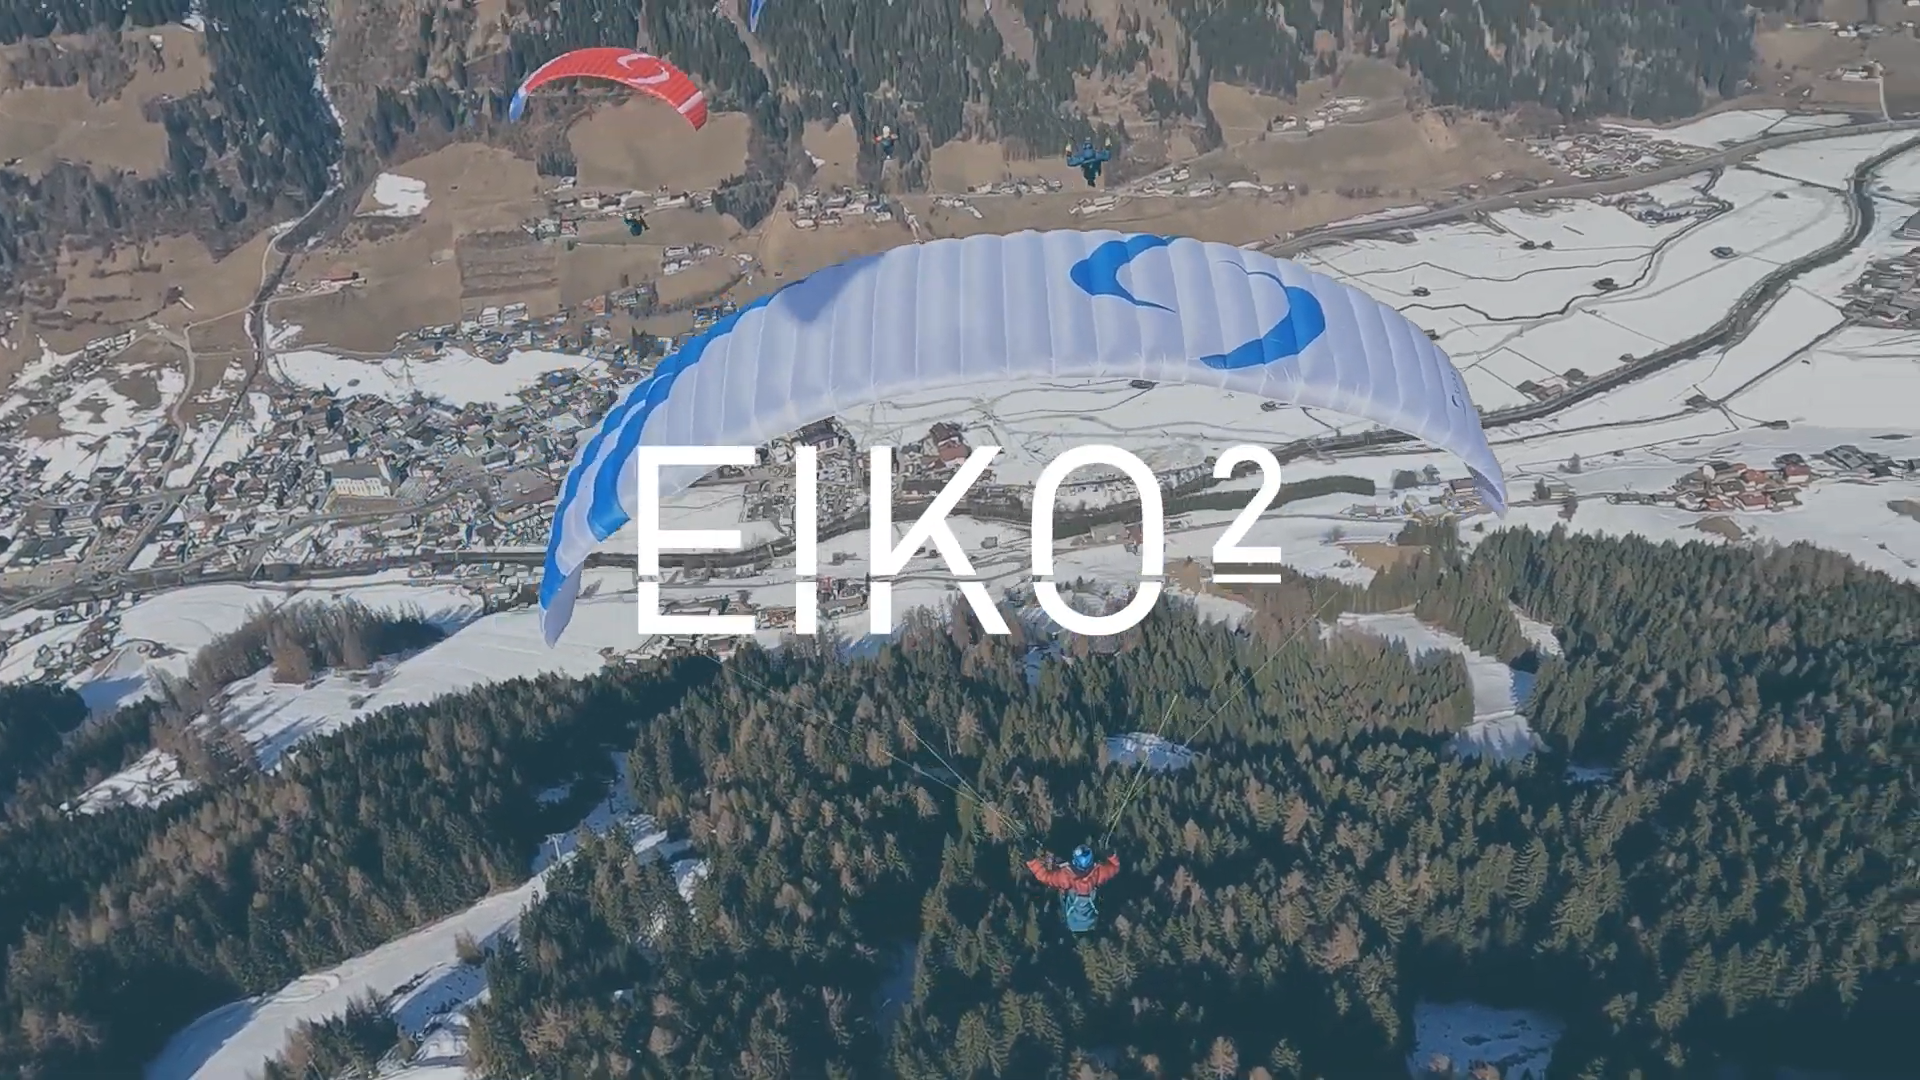 Vídeo de presentación técnica en miniatura del EIKO2